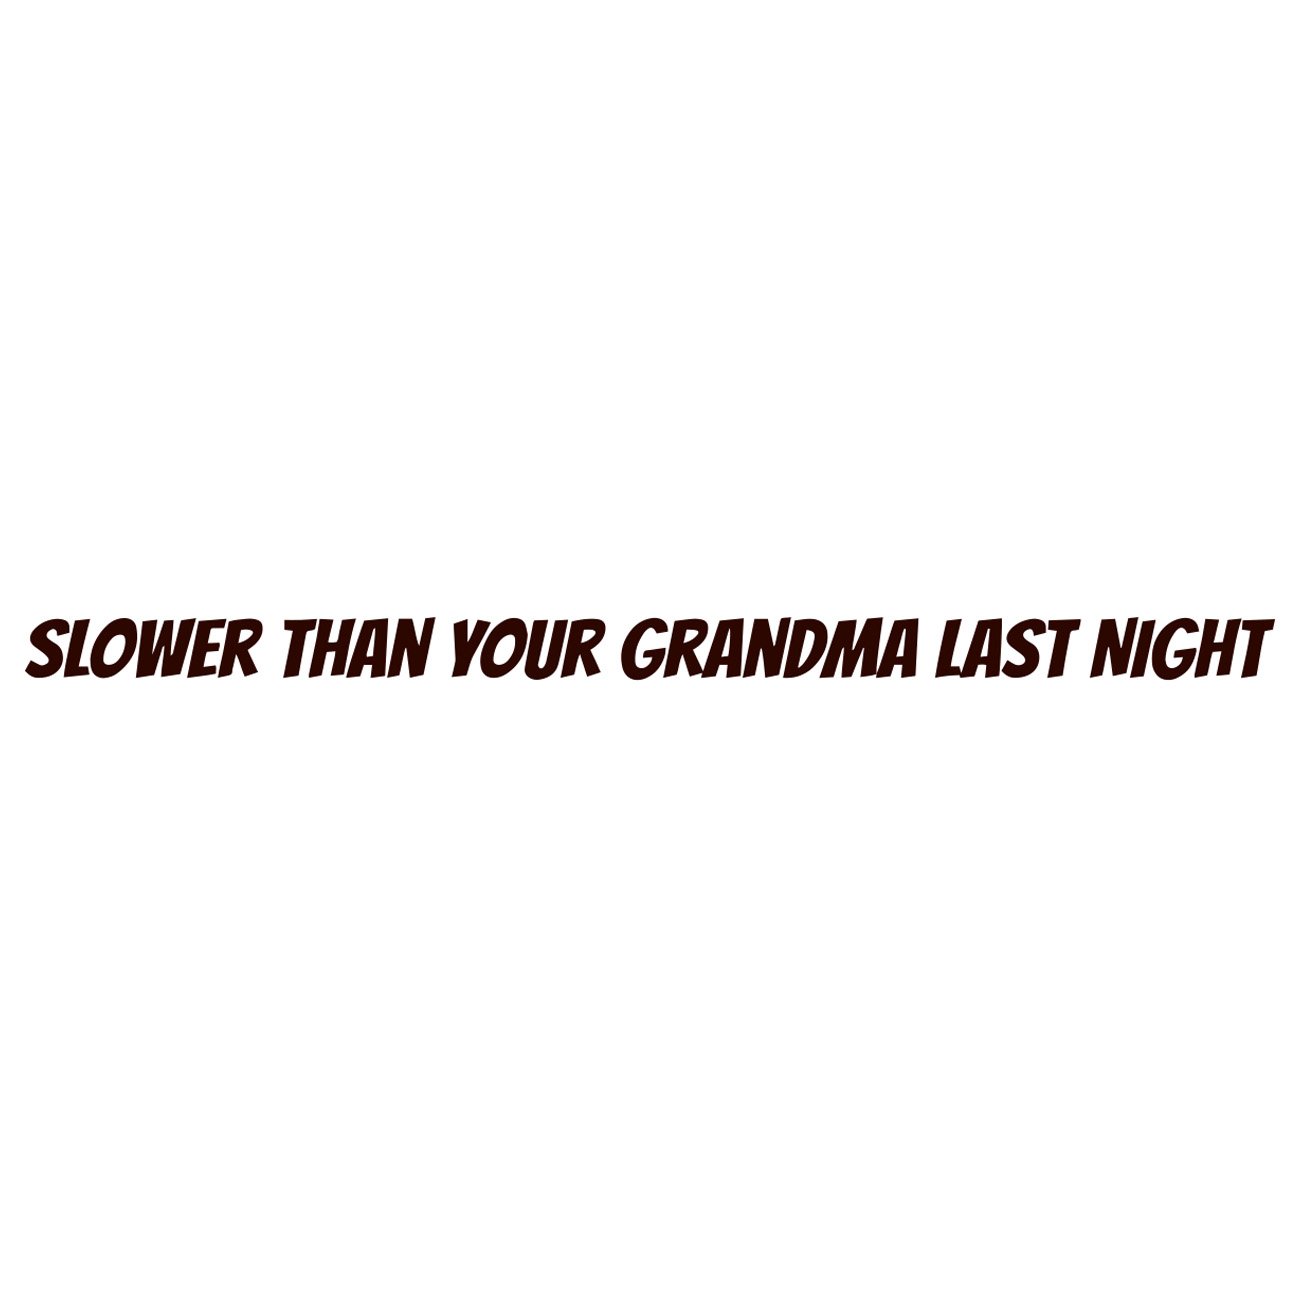 Slower than your grandma last night